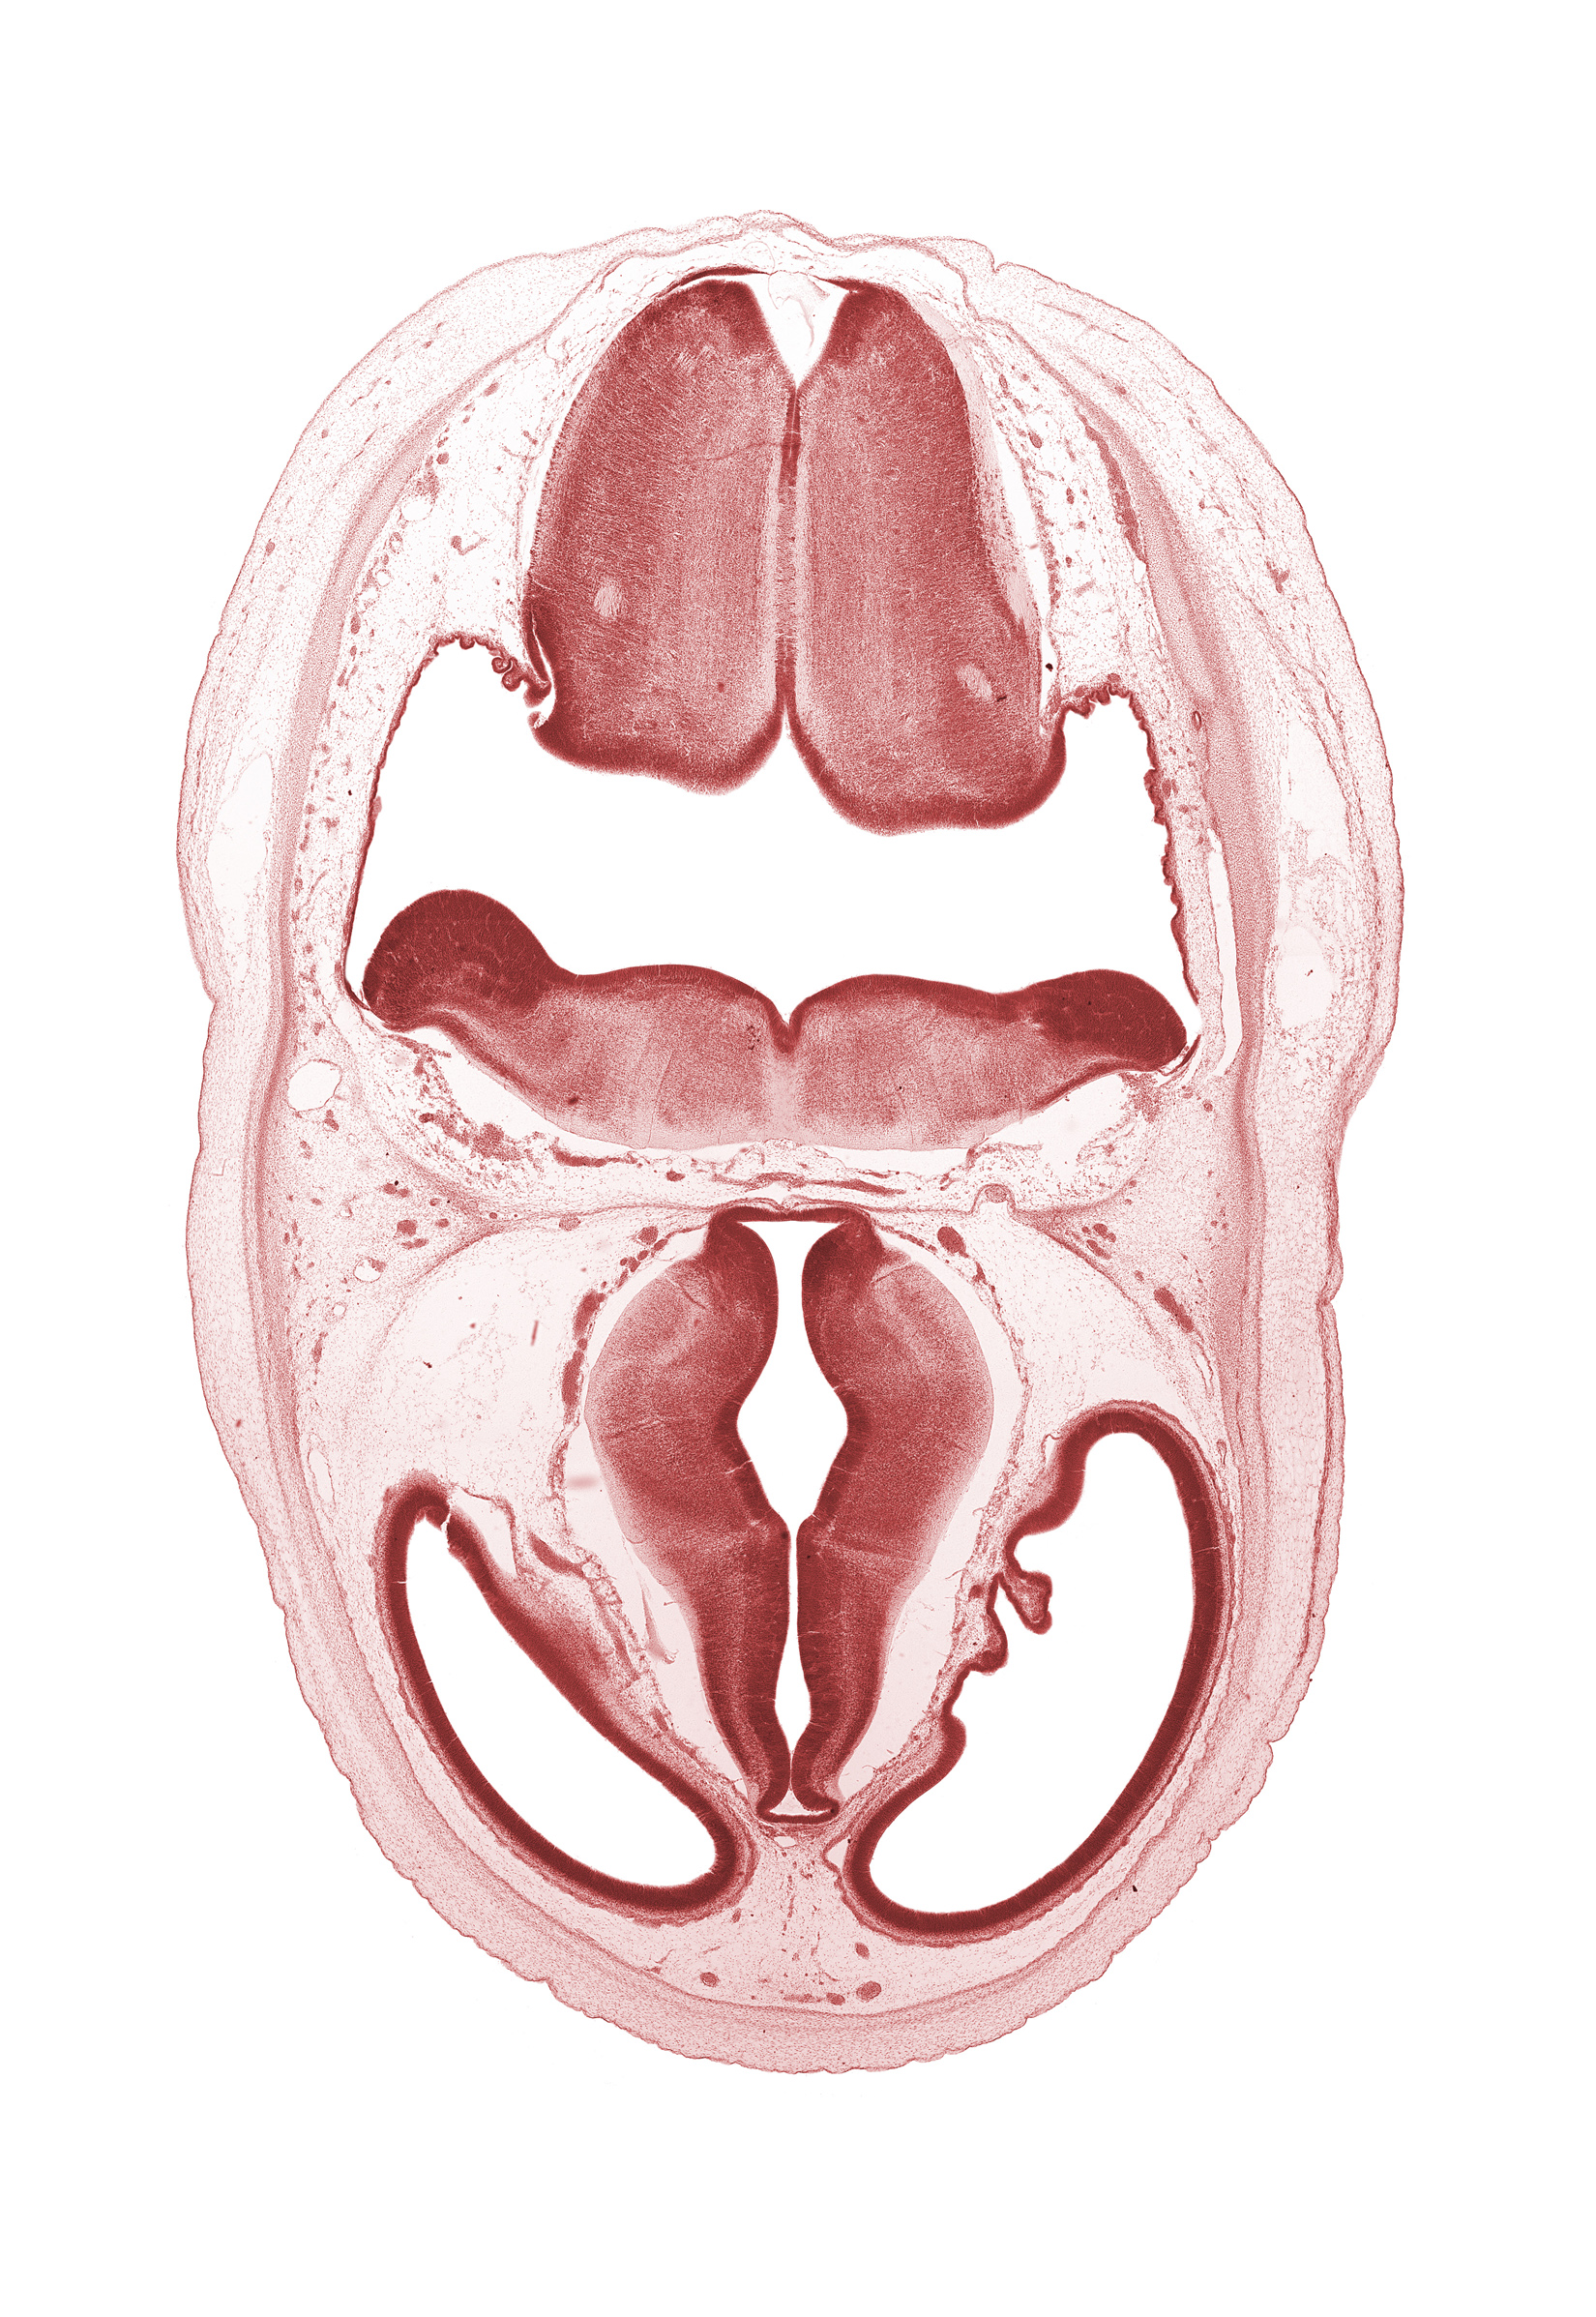 artifact separation(s), dural band for tentorium cerebelli, edge of choroid plexus, edge of endolymphatic duct, floor of diencephalon, lateral ventricle, oculomotor nerve (CN III), osteogenic layer, rhombencoel (fourth ventricle), roof of diencephalon, third ventricle, vascular plexus